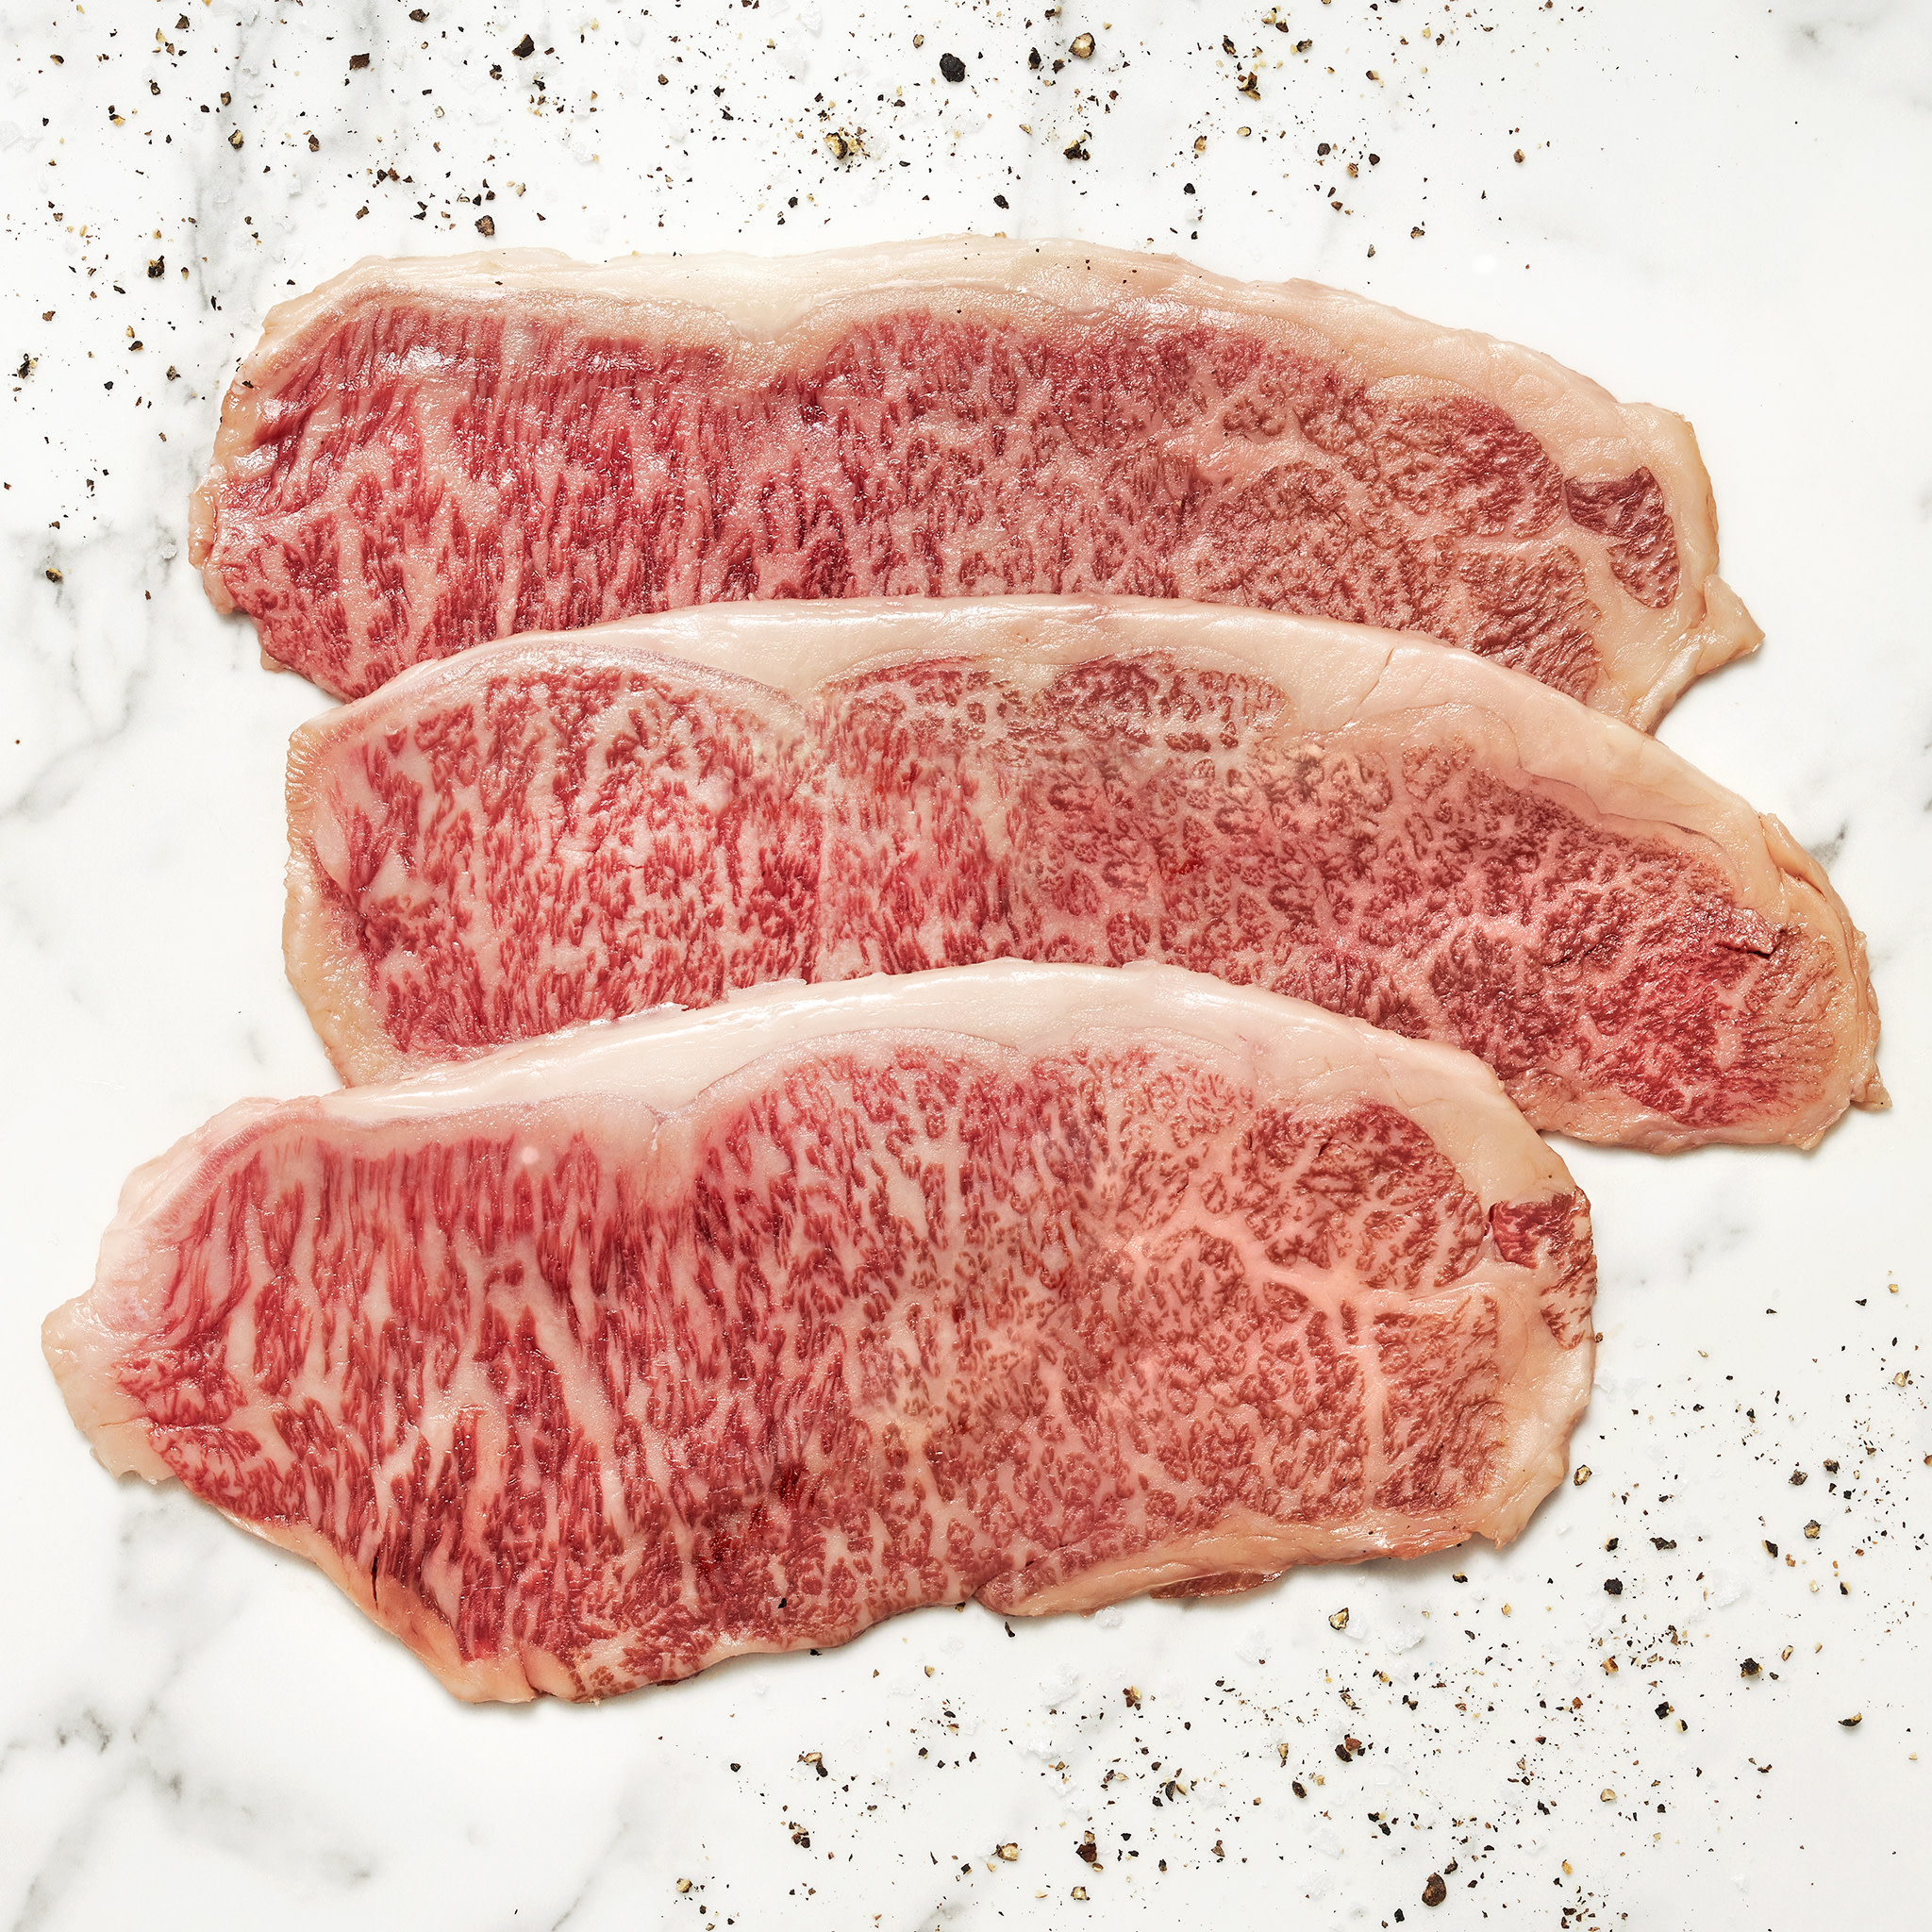 1862 WF RAW A5 Wagyu Beef Thin NY Strip Steak Beef